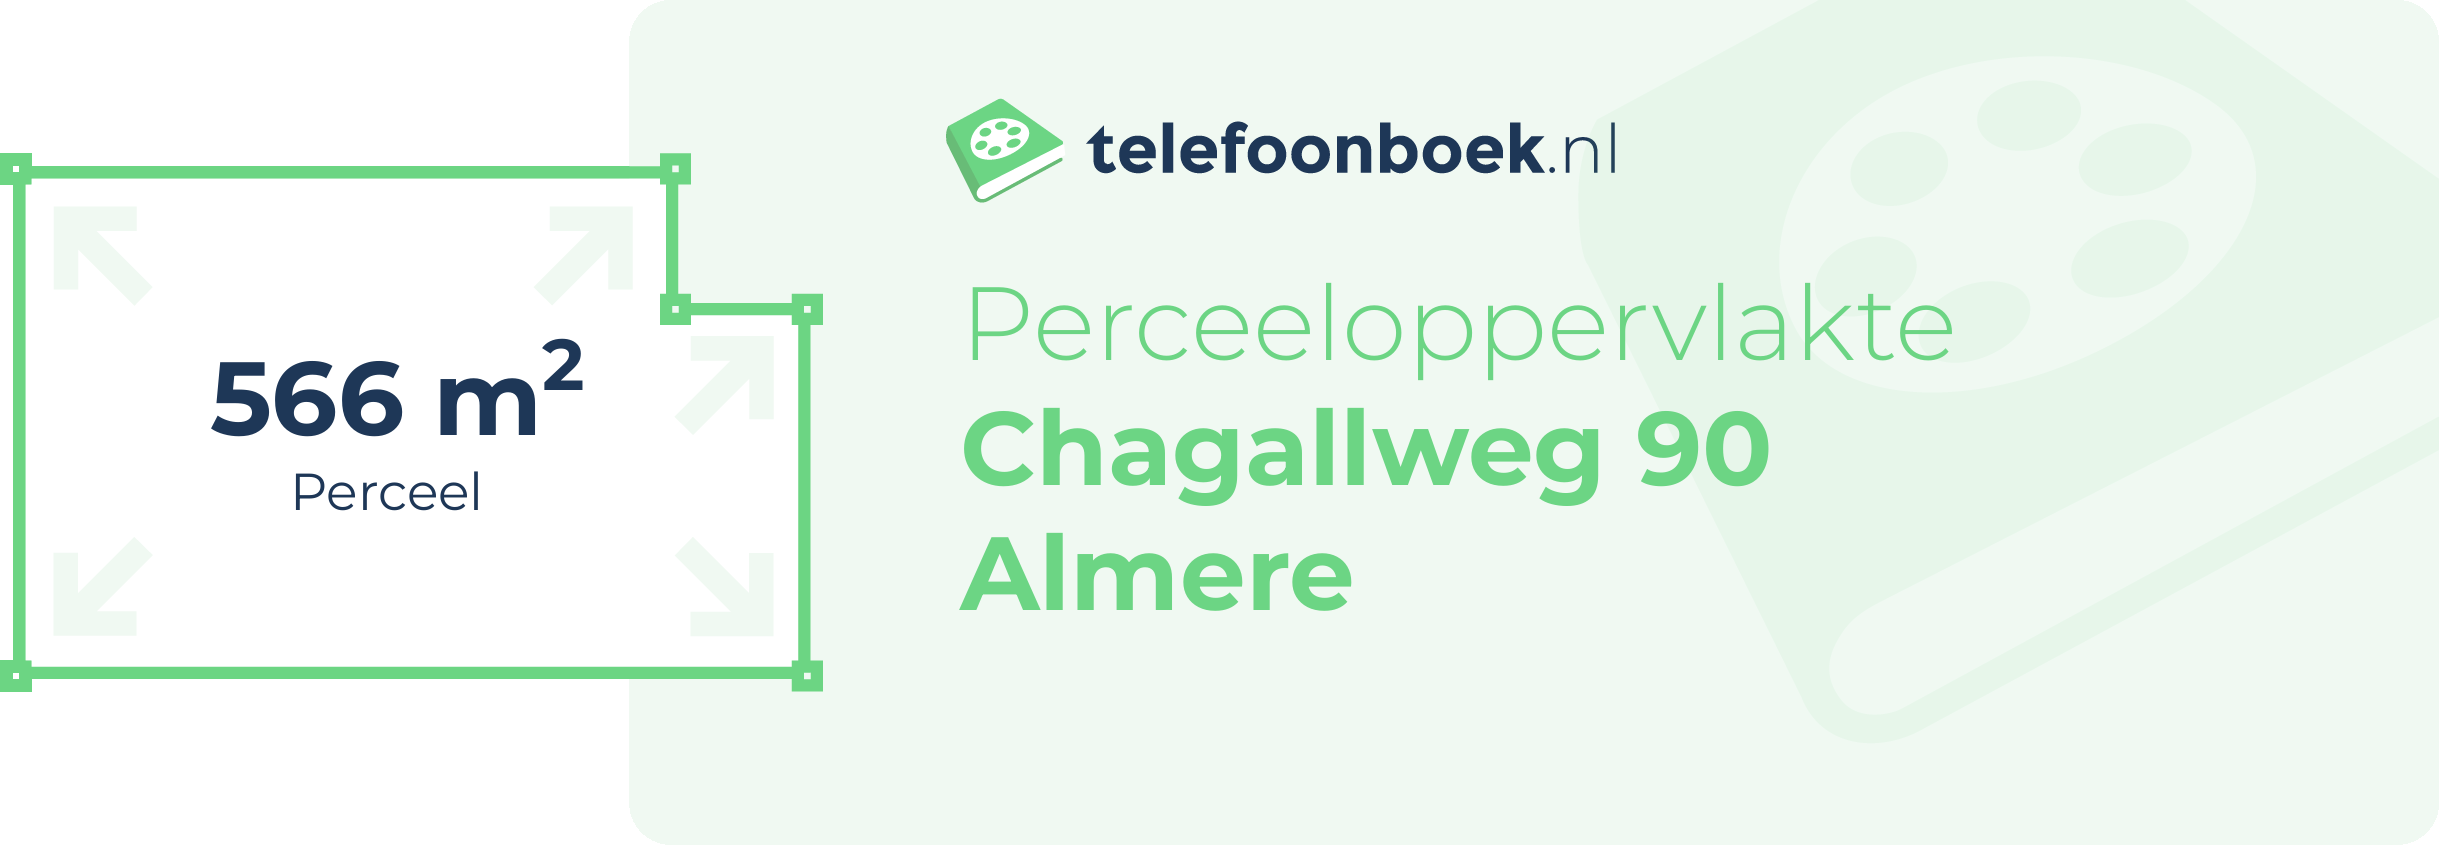 Perceeloppervlakte Chagallweg 90 Almere